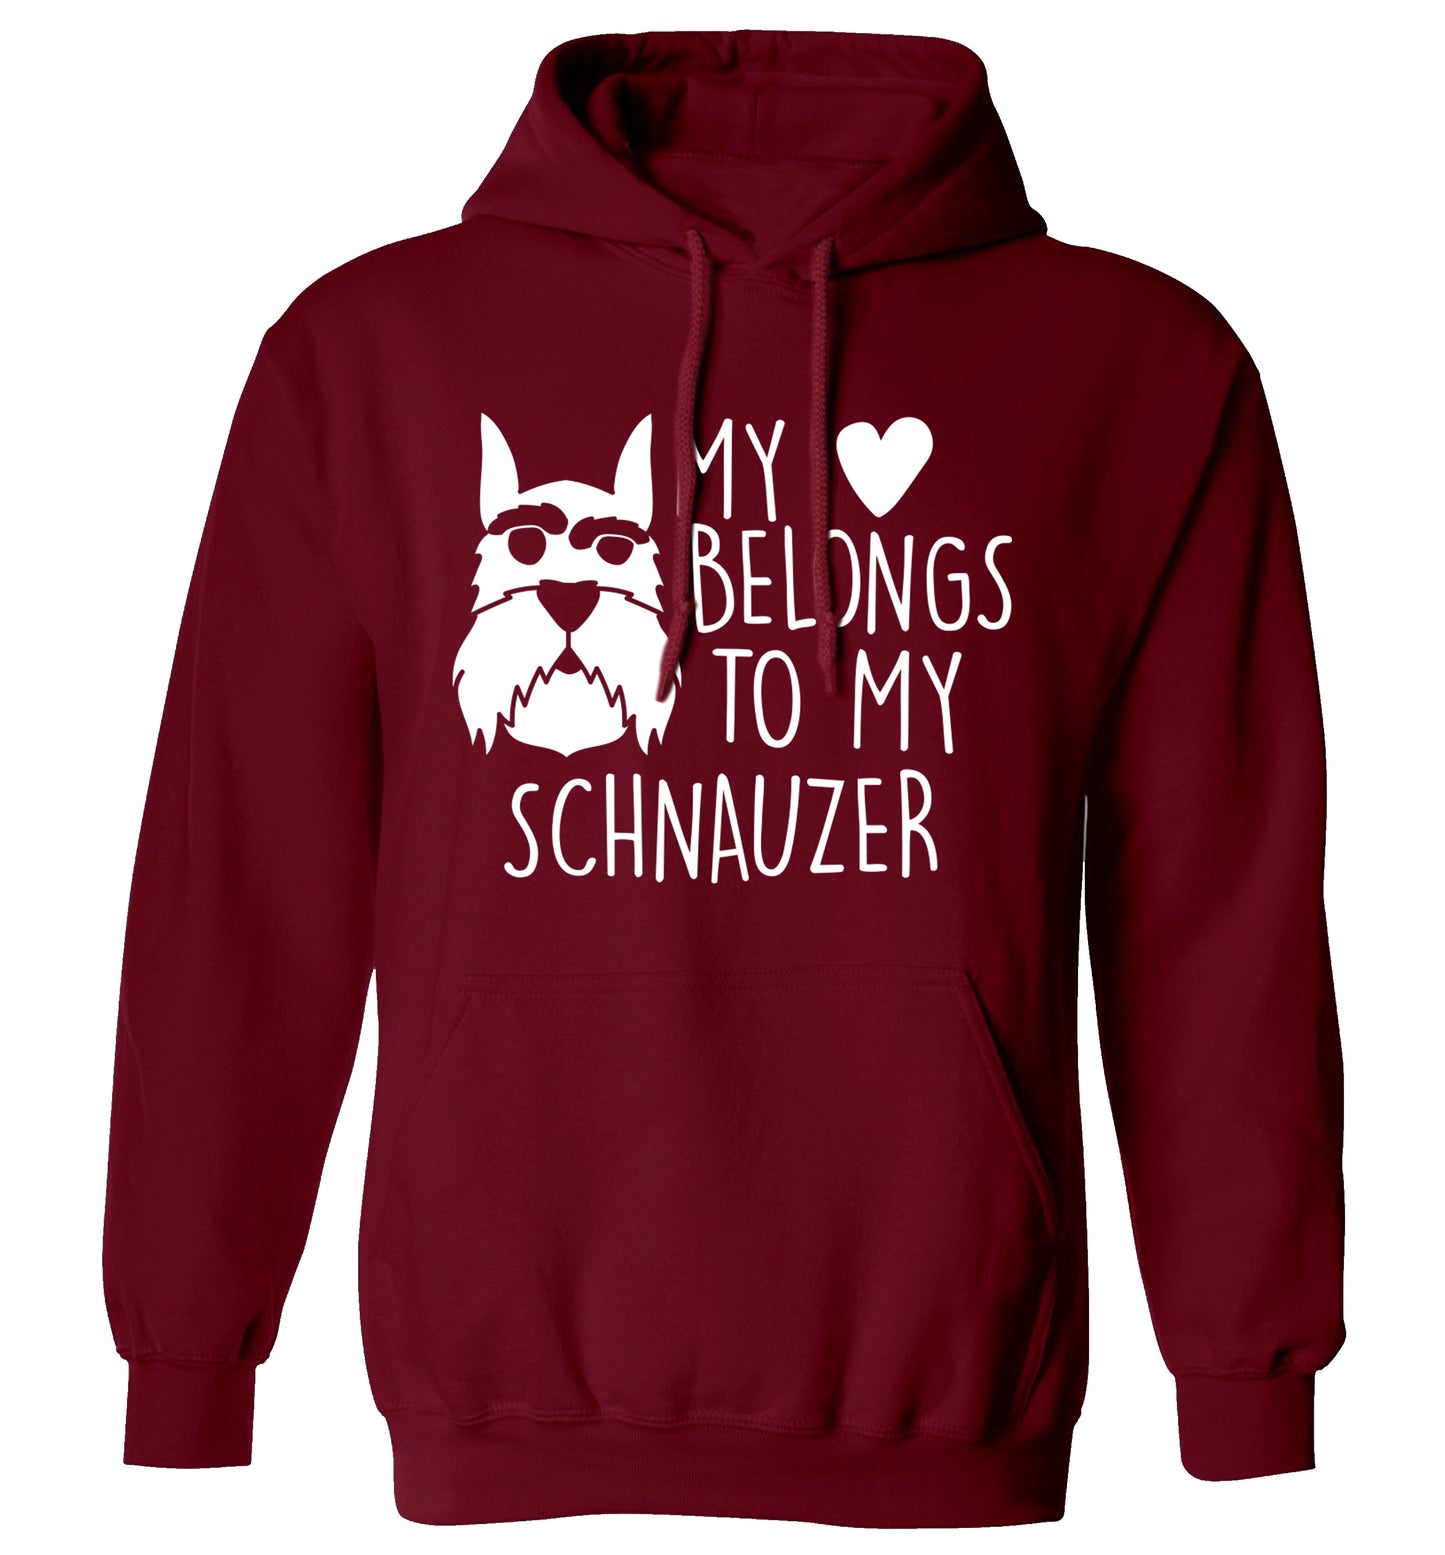 My heart belongs to my schnauzer adults unisex maroon hoodie 2XL